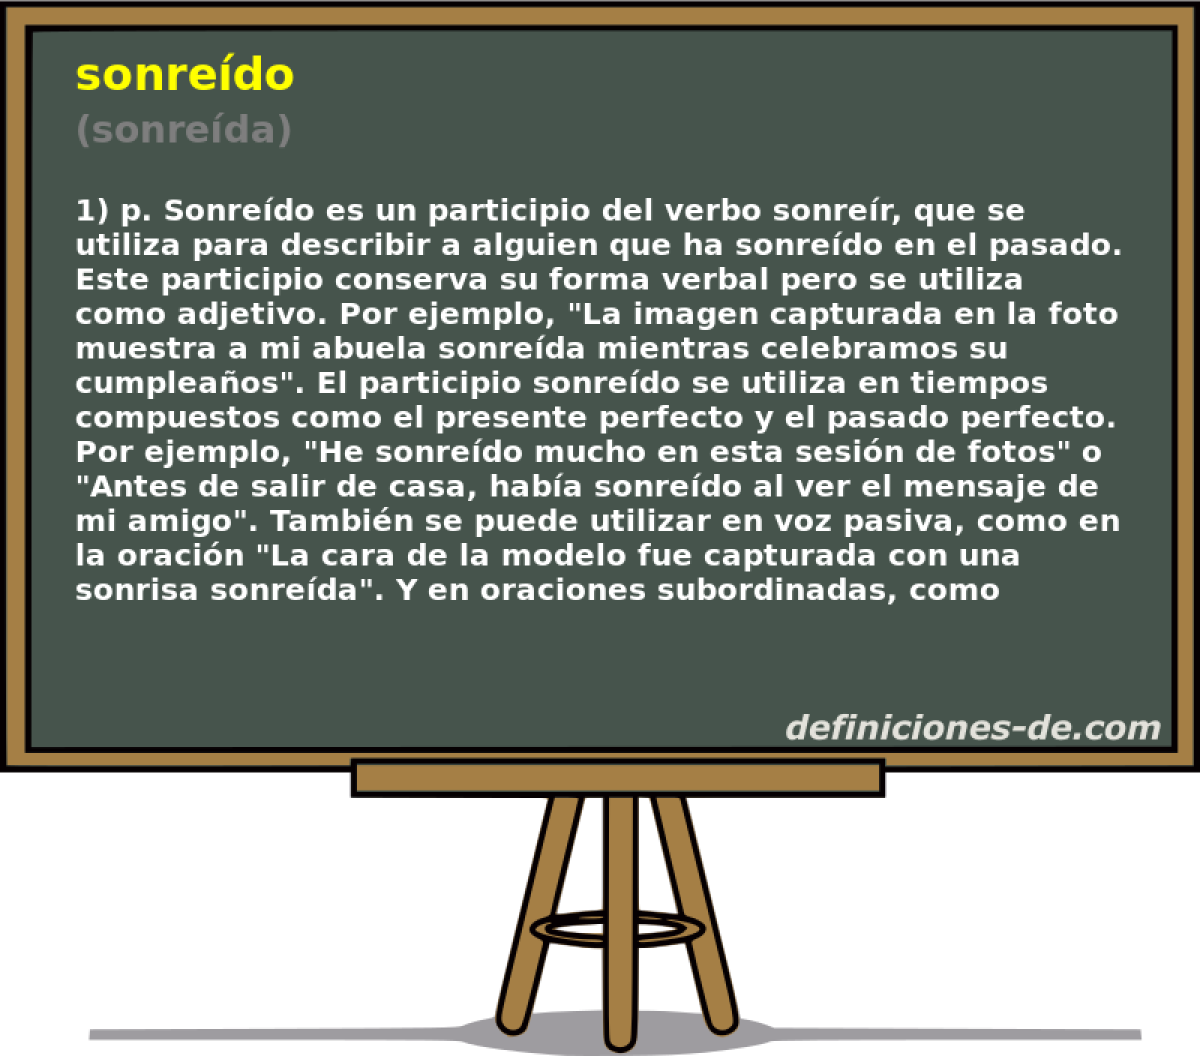 sonredo (sonreda)